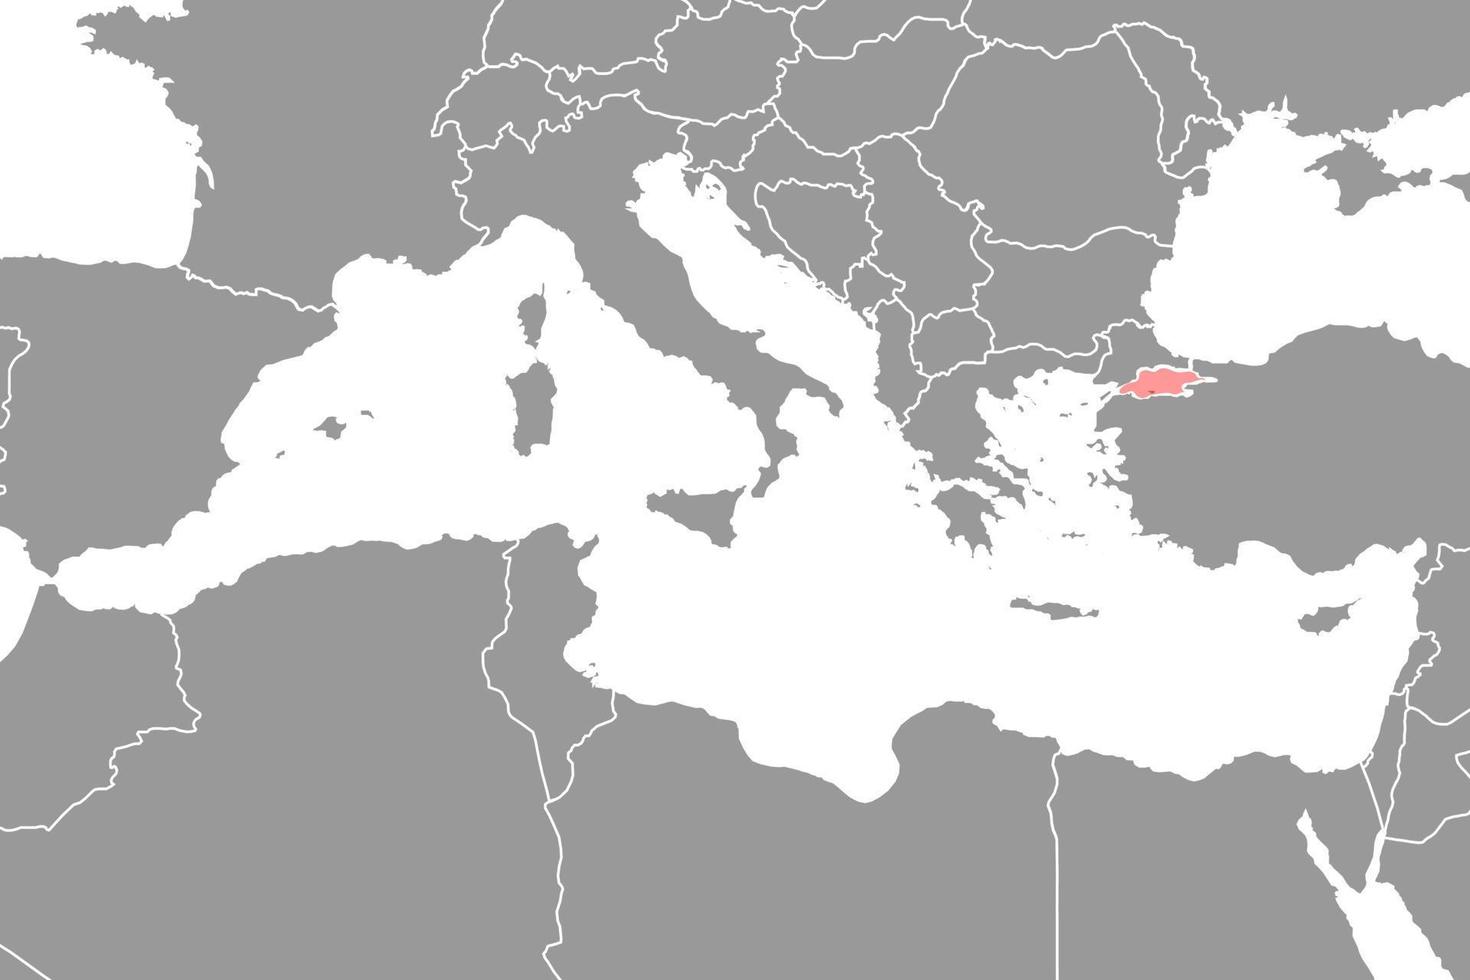 Sea of Marmara on the world map. Vector illustration.